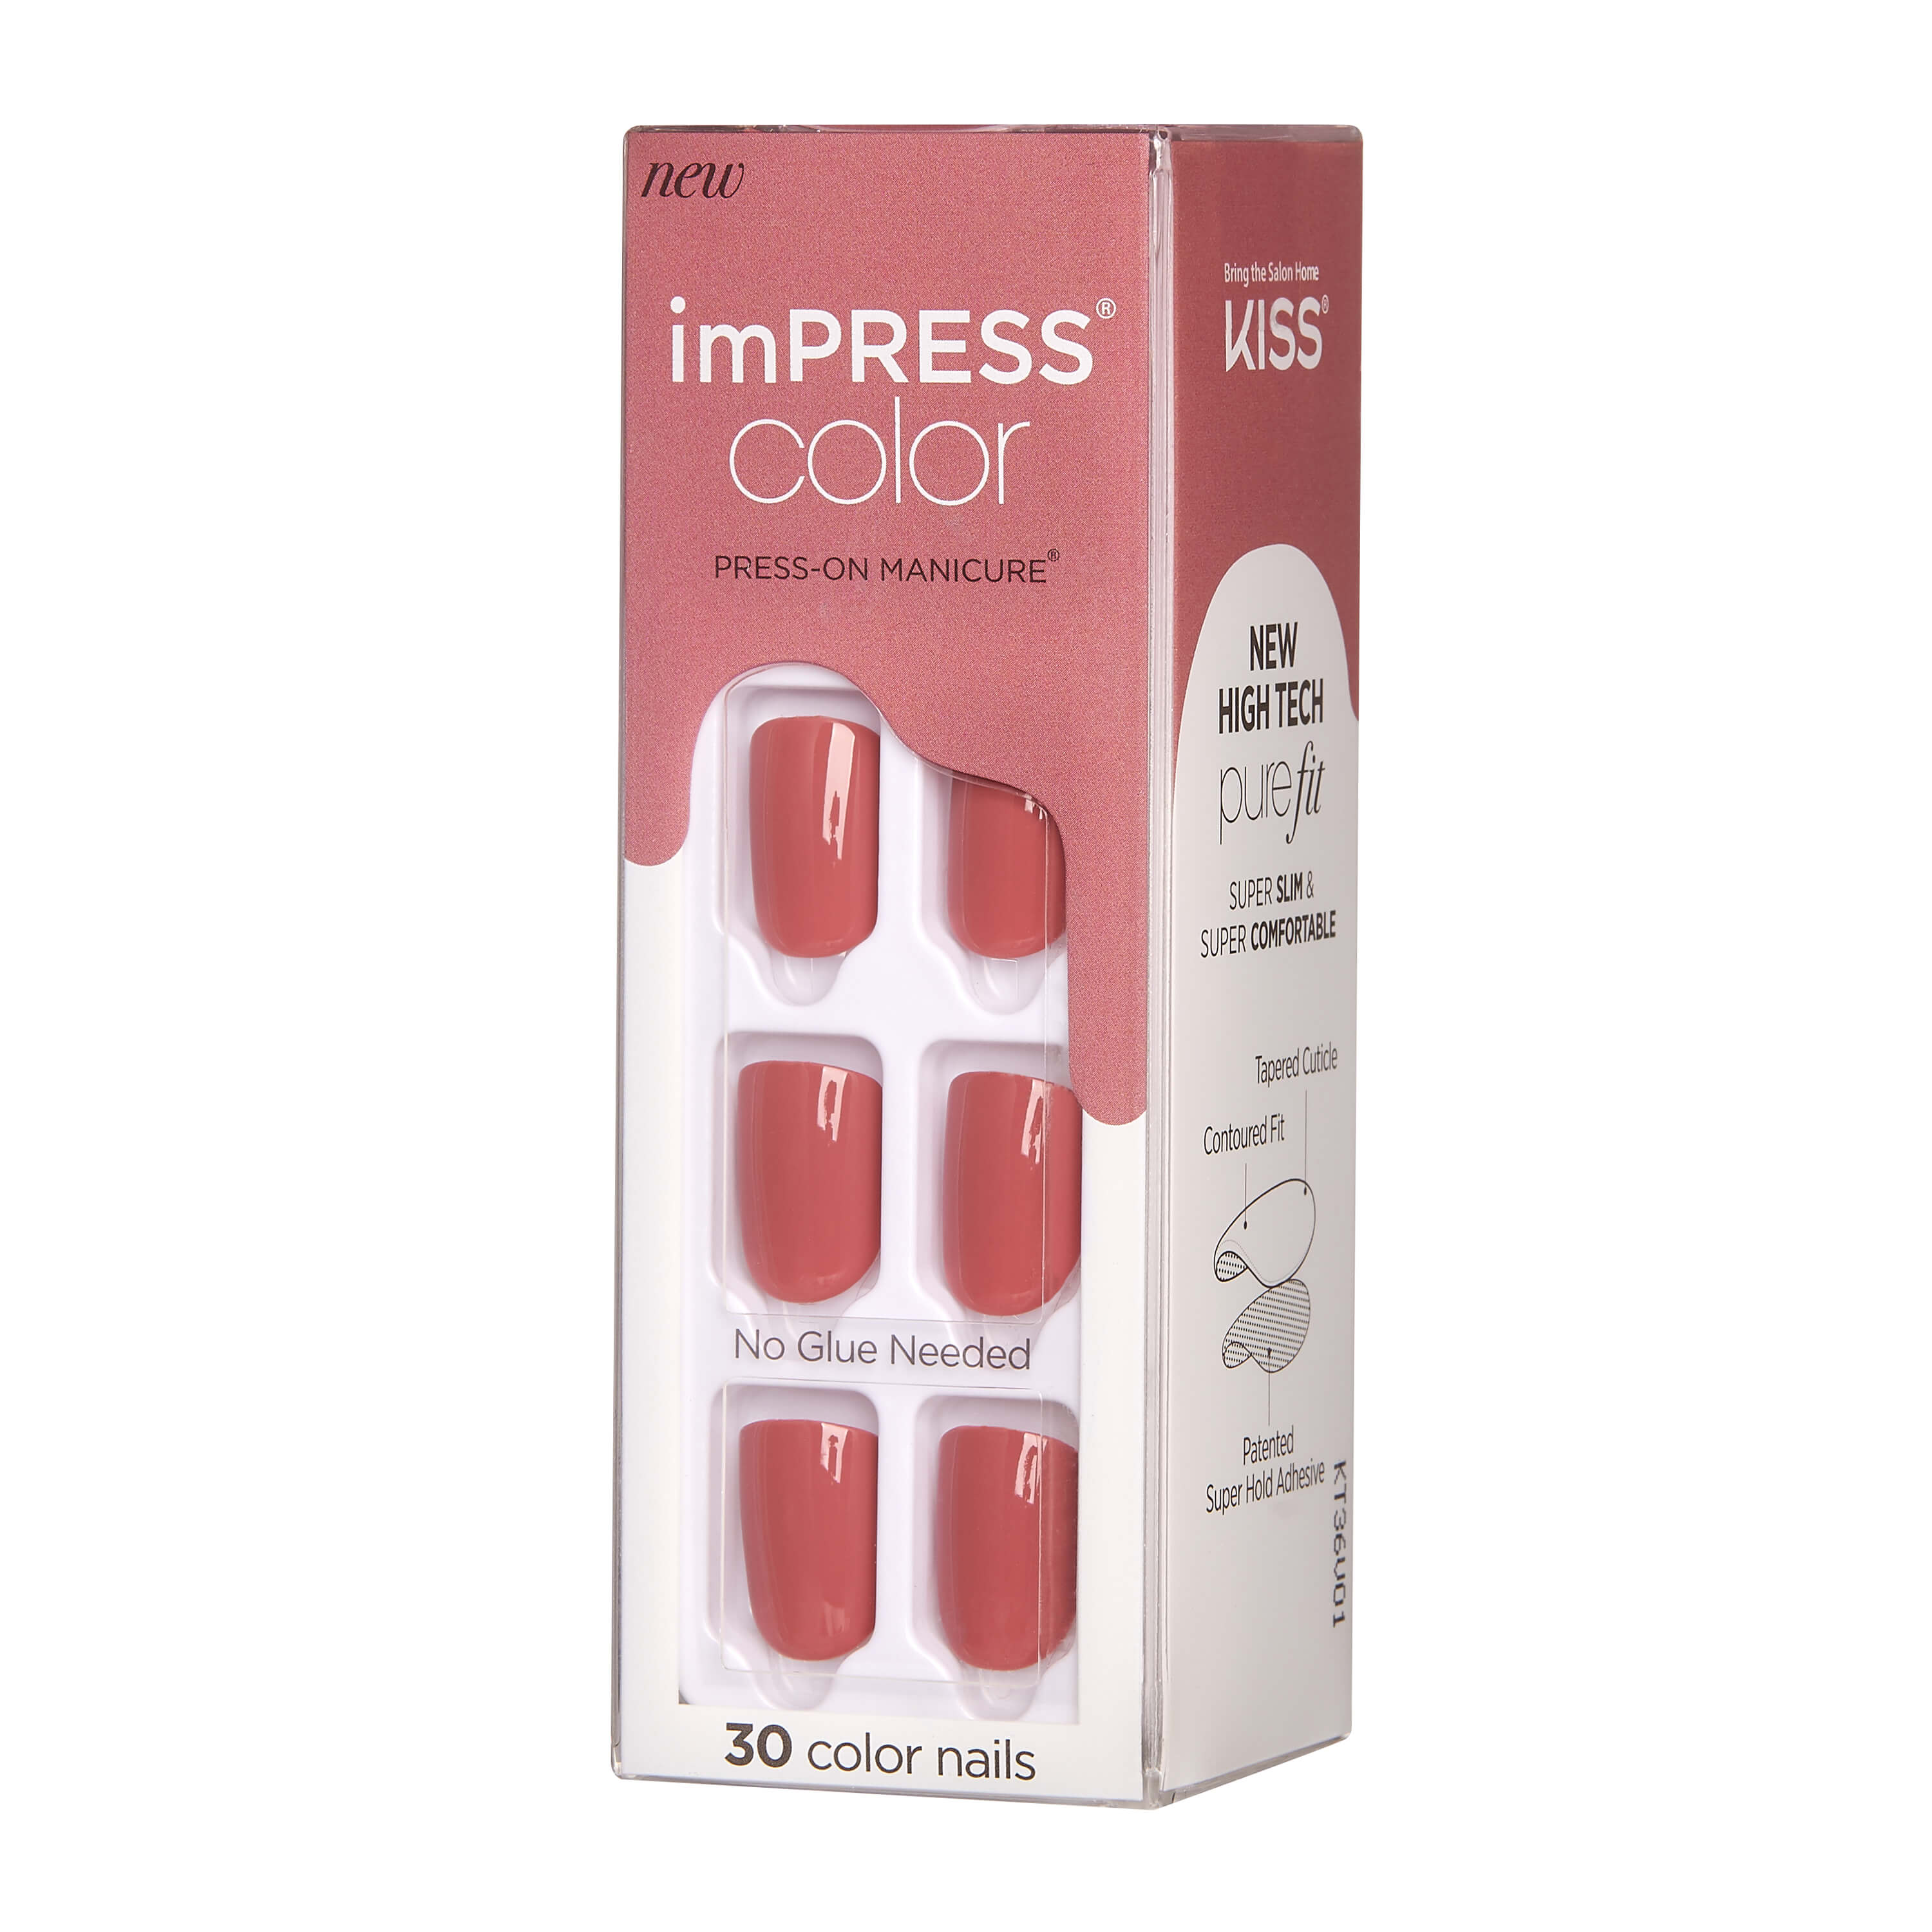 KISS imPRESS Color Press-on Manicure, Platonic Pink, Short, Adult ...